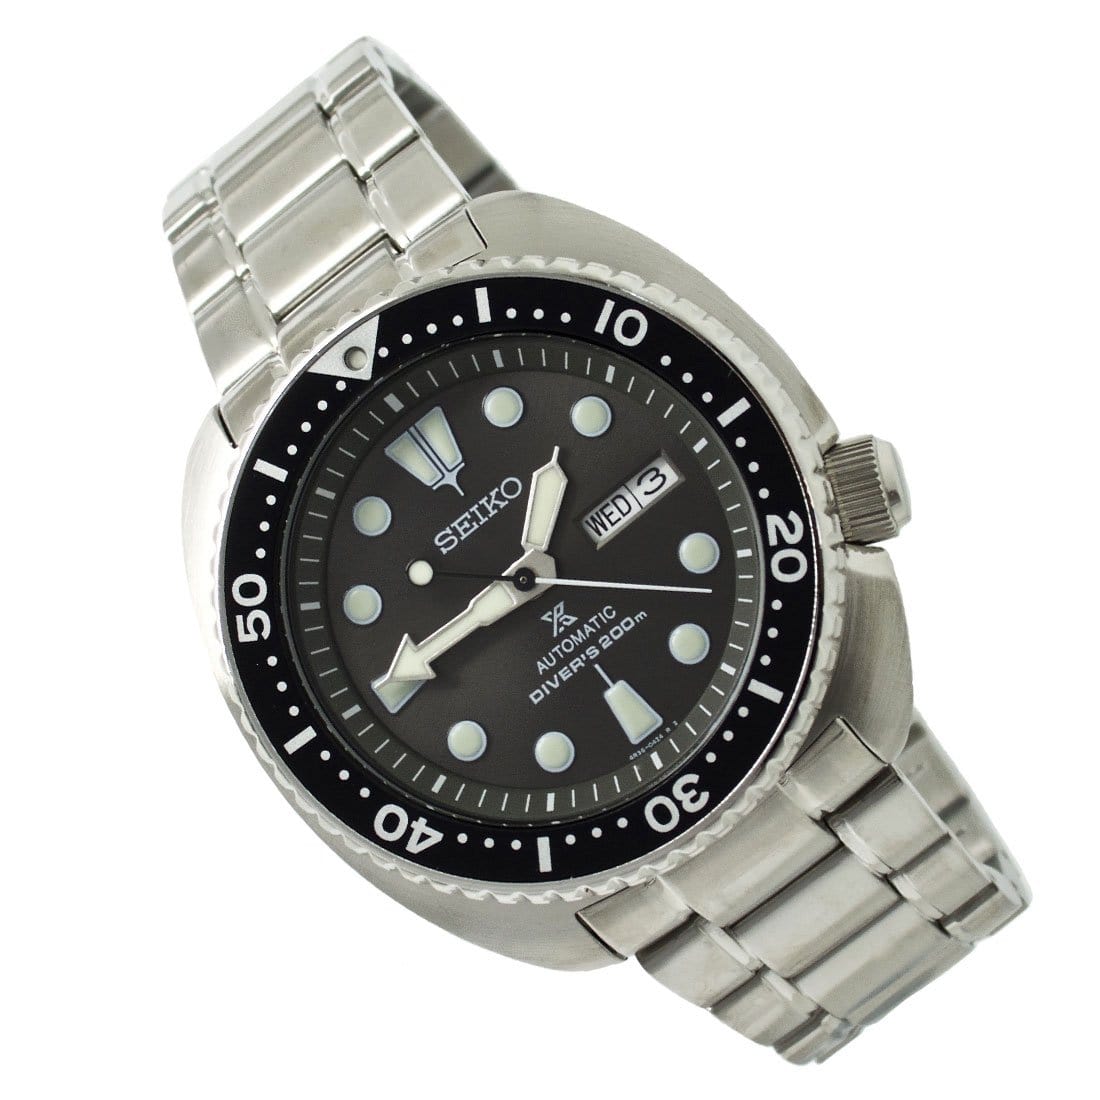 Seiko Turtle Prospex Dive Watch SRPC23 SRPC23K1